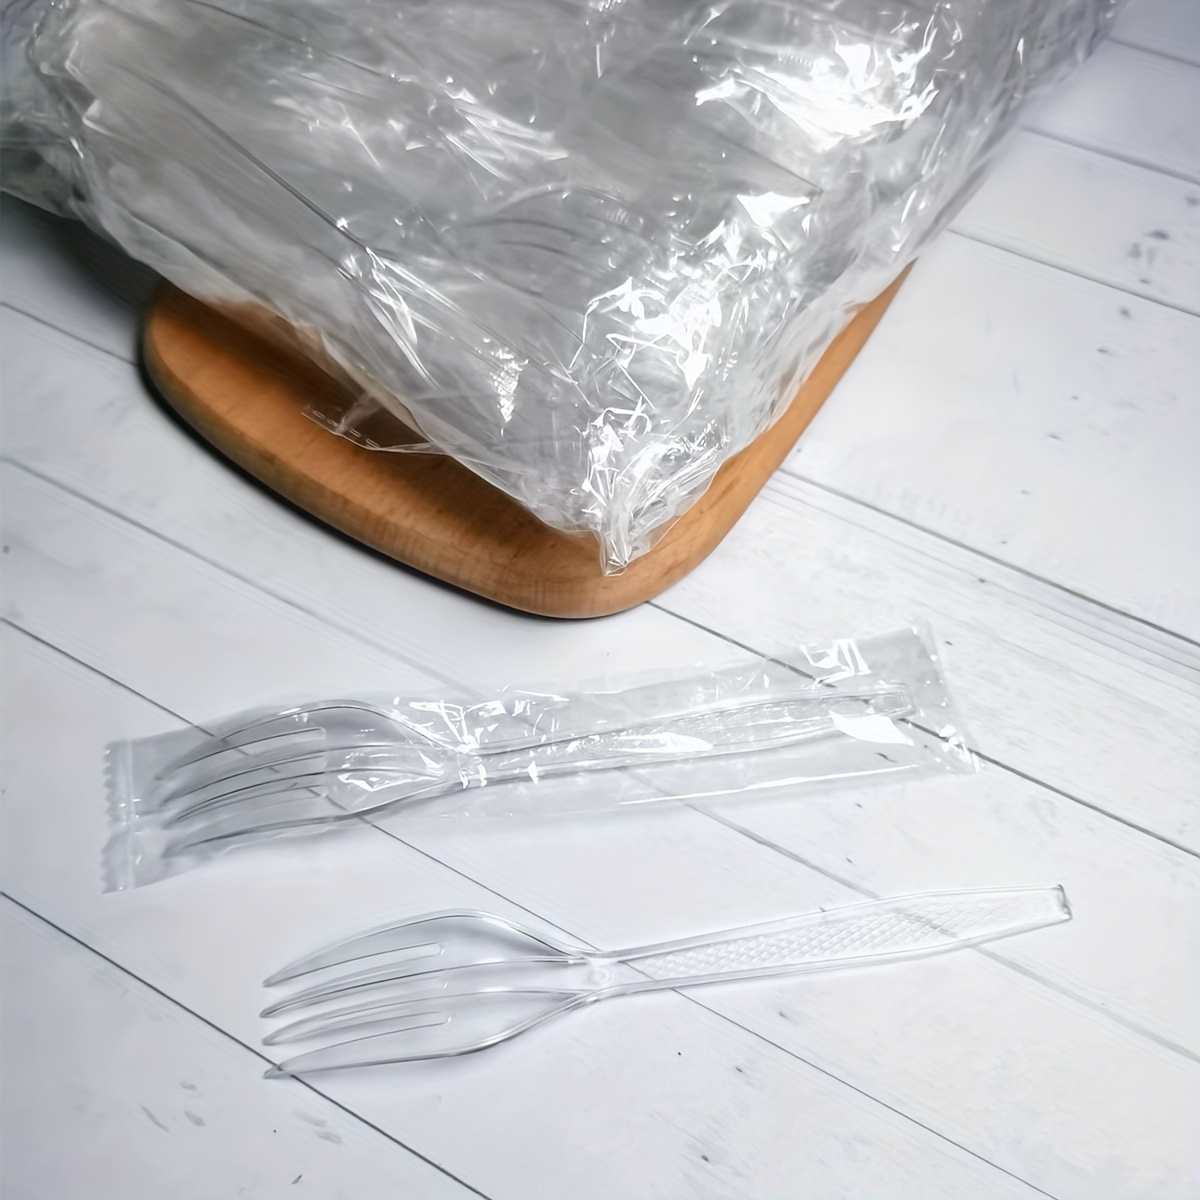 50 Pack Black Heavy Duty Plastic Utensil Set, Premium Disposable Sleek  Cutlery Flatware in 2023